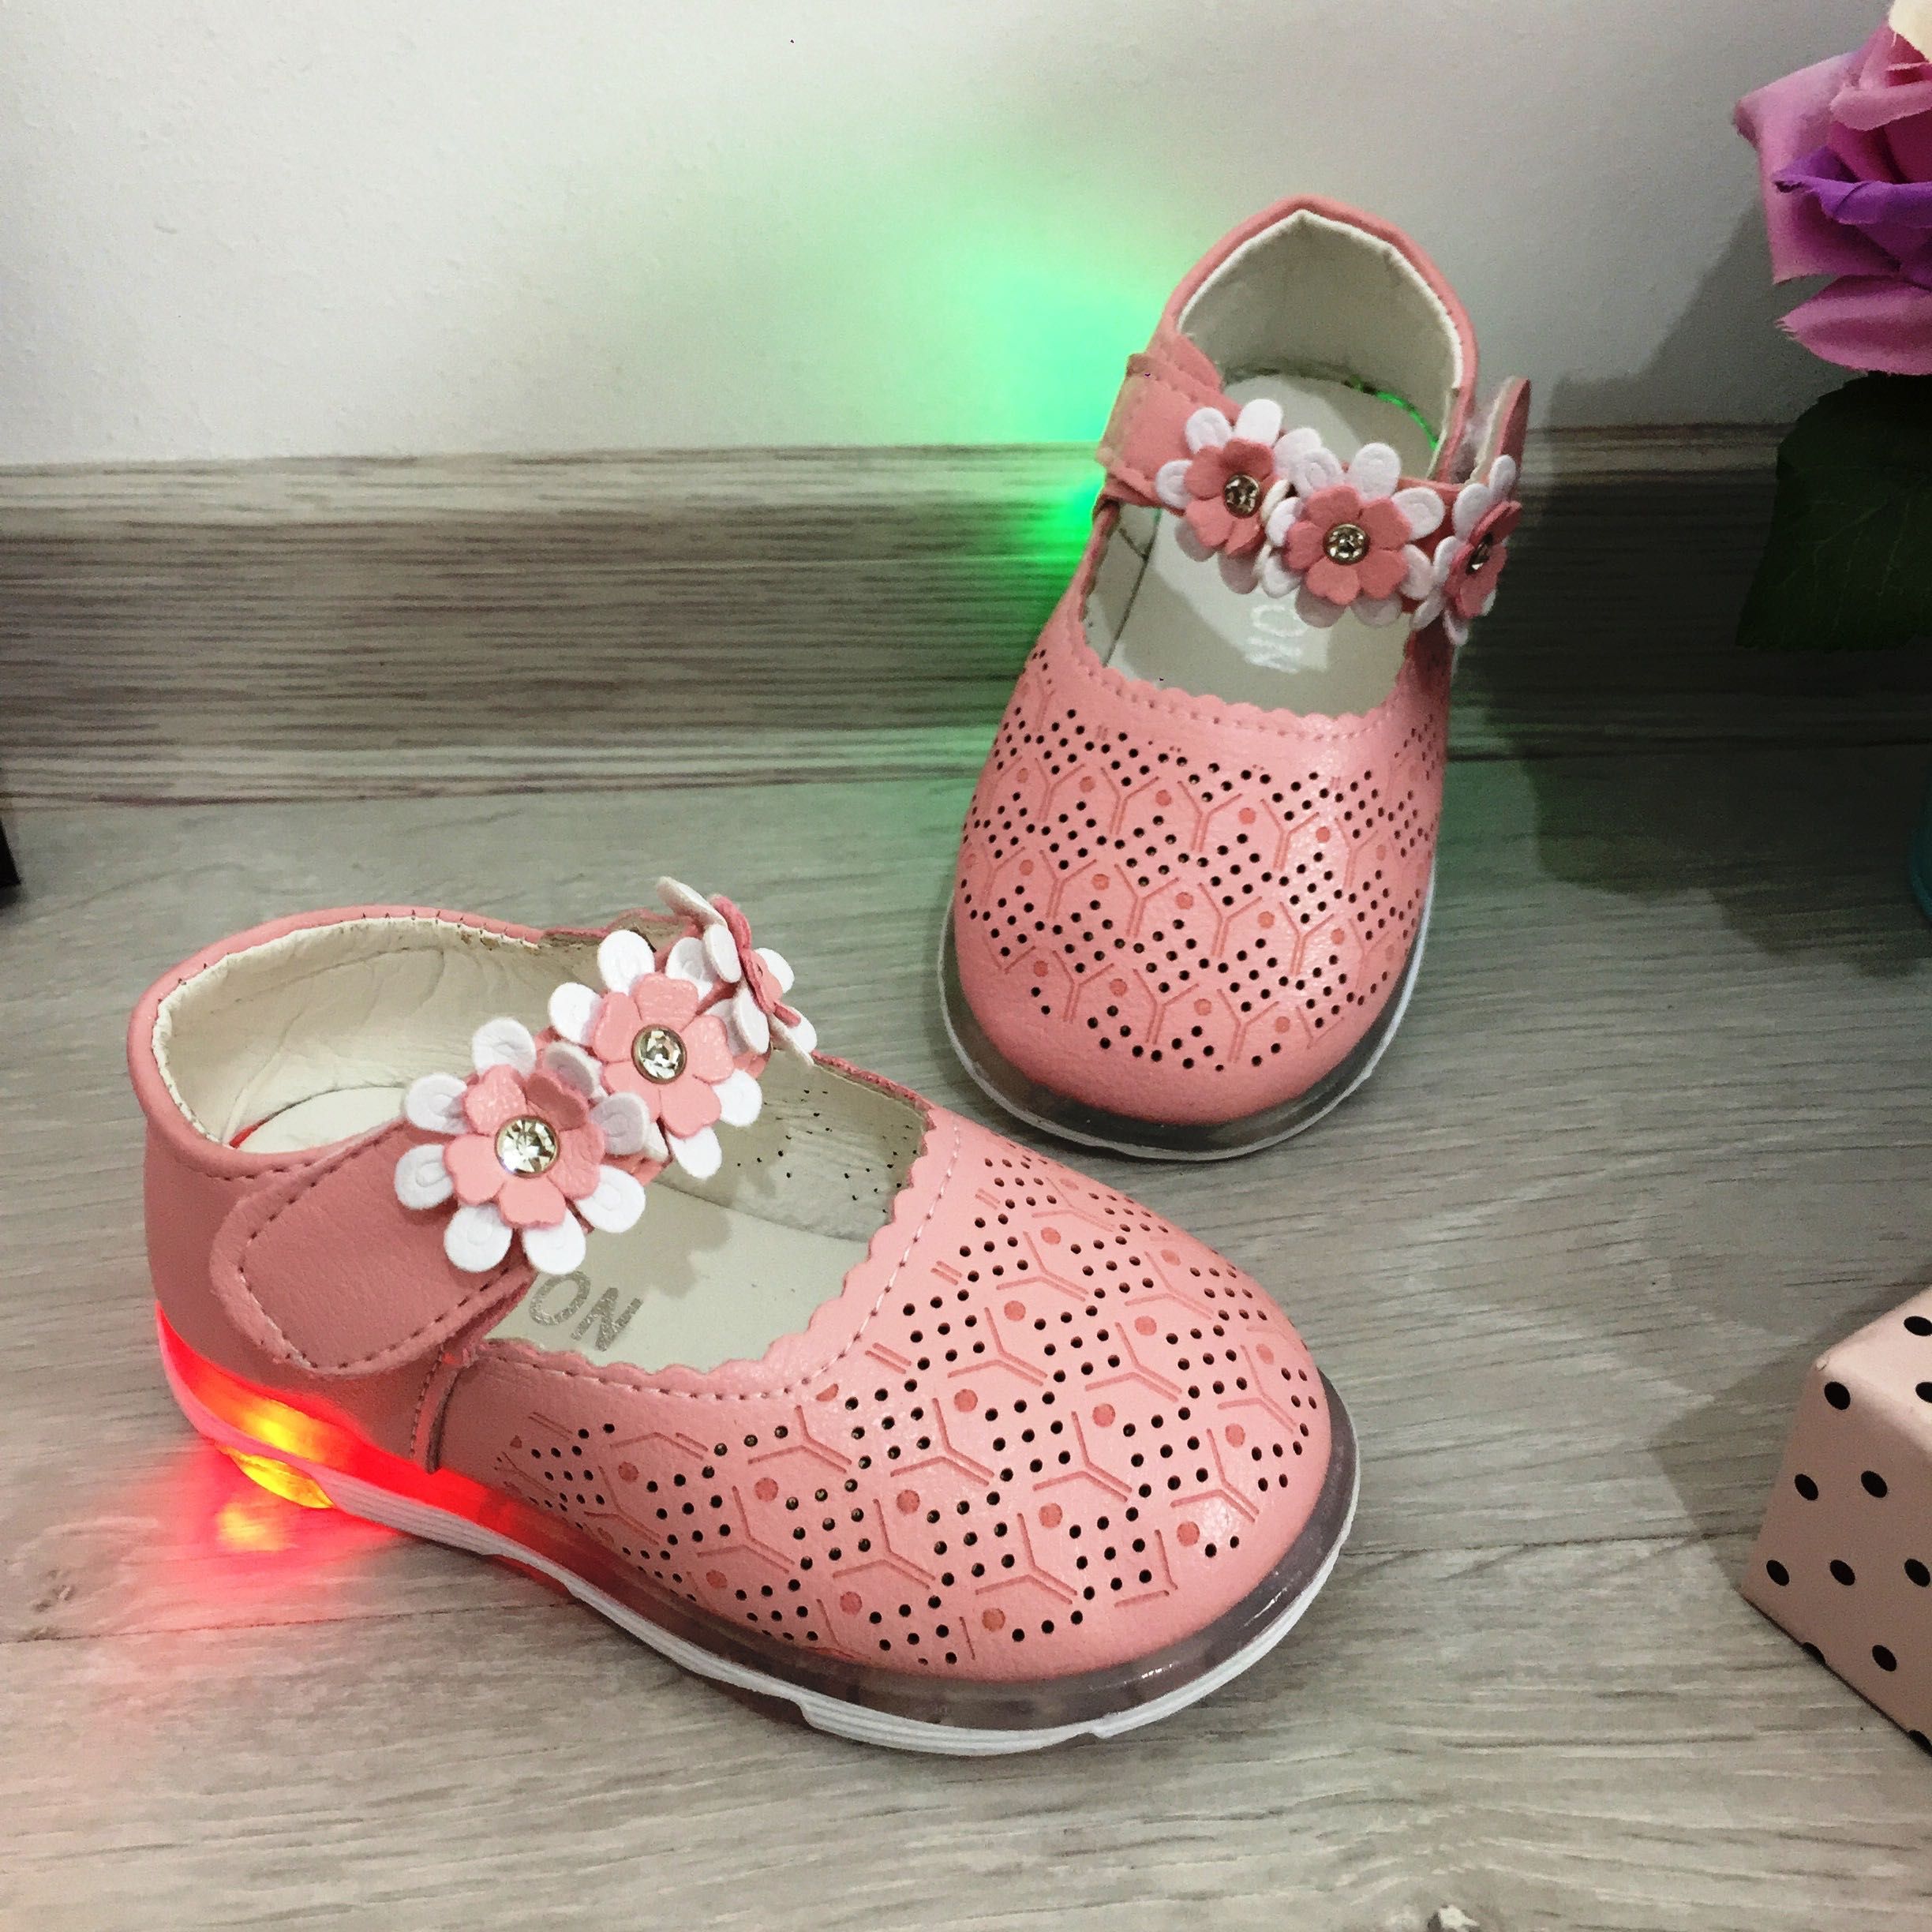 NOU Pantofi roz usori cu floricele lumini LED pt fetite 18